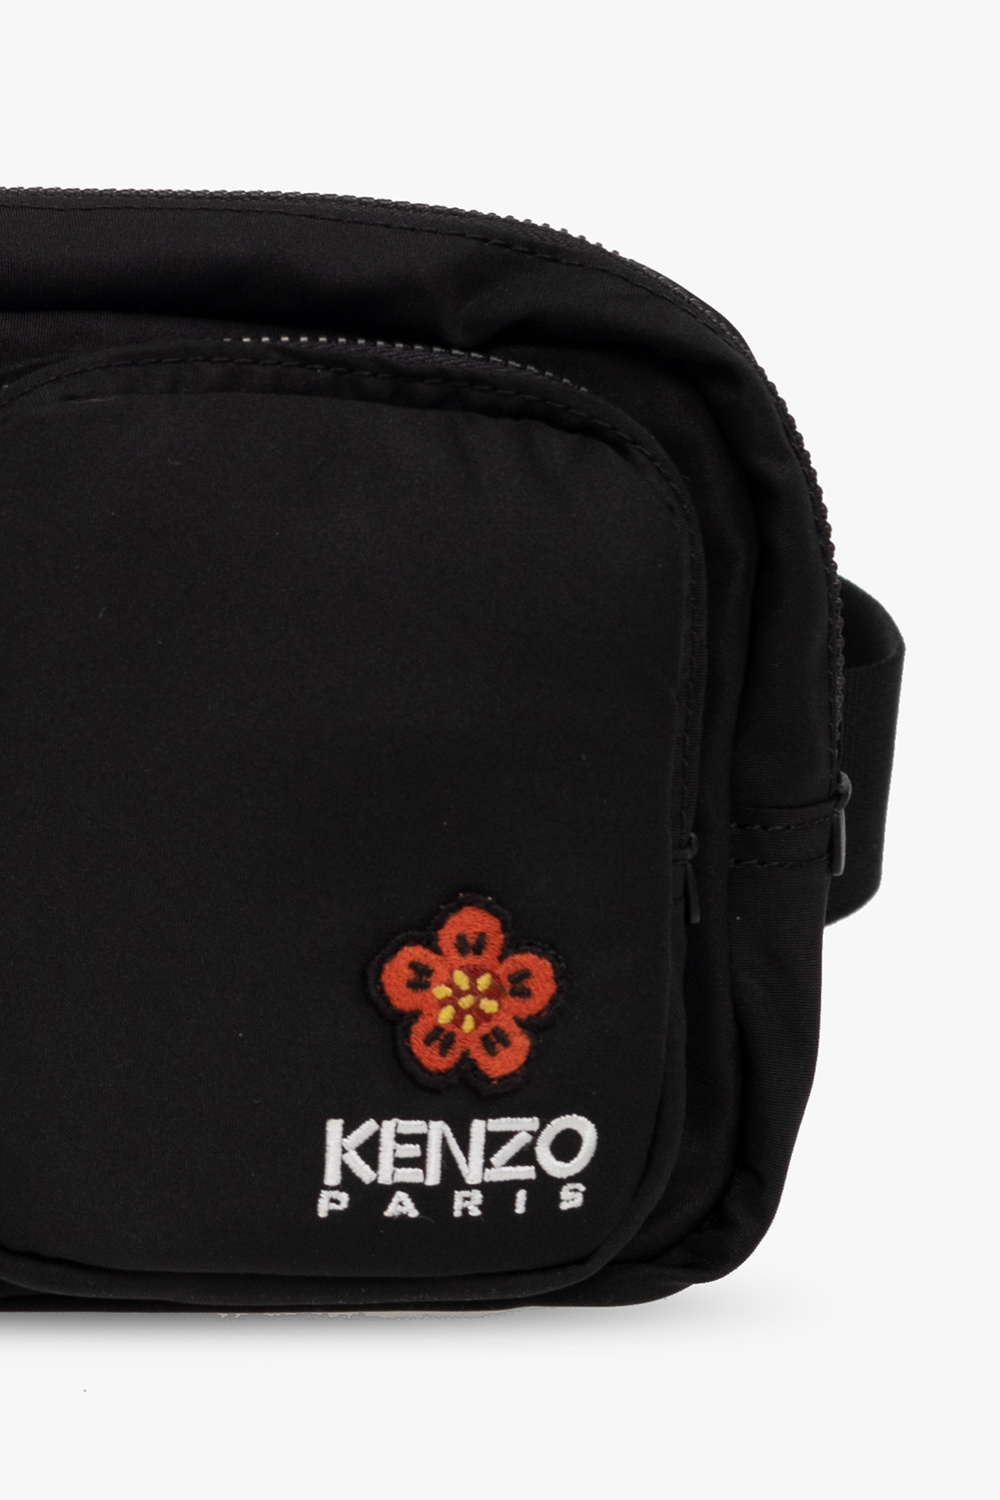 Kenzo Belt Musette bag with logo